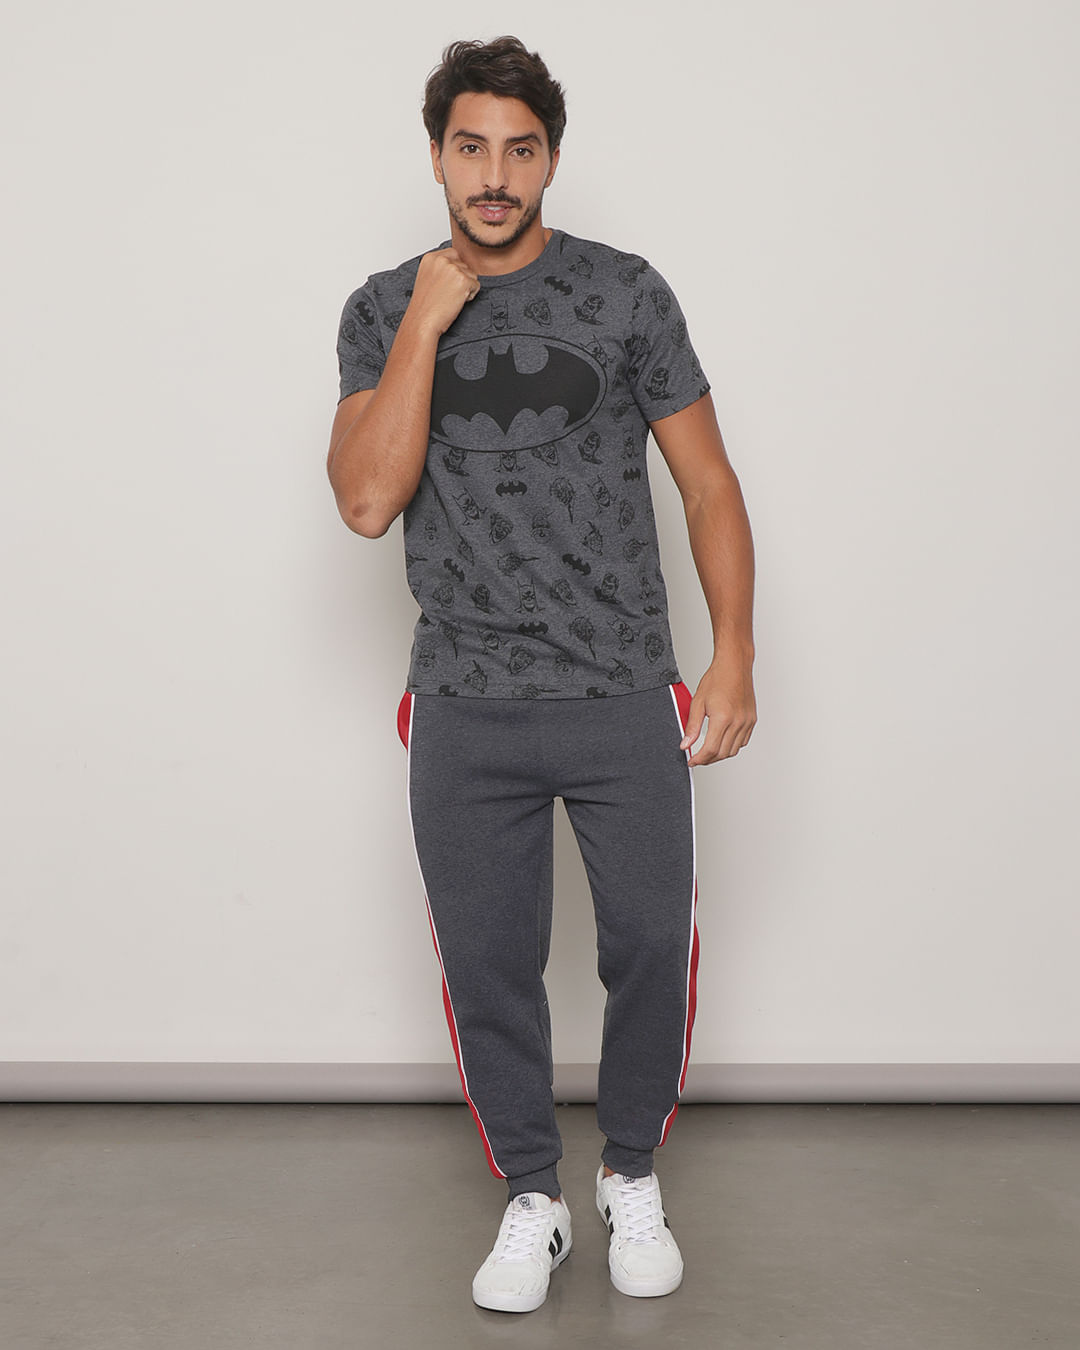 Camiseta Masculina Manga Curta Batman Cinza Mescla